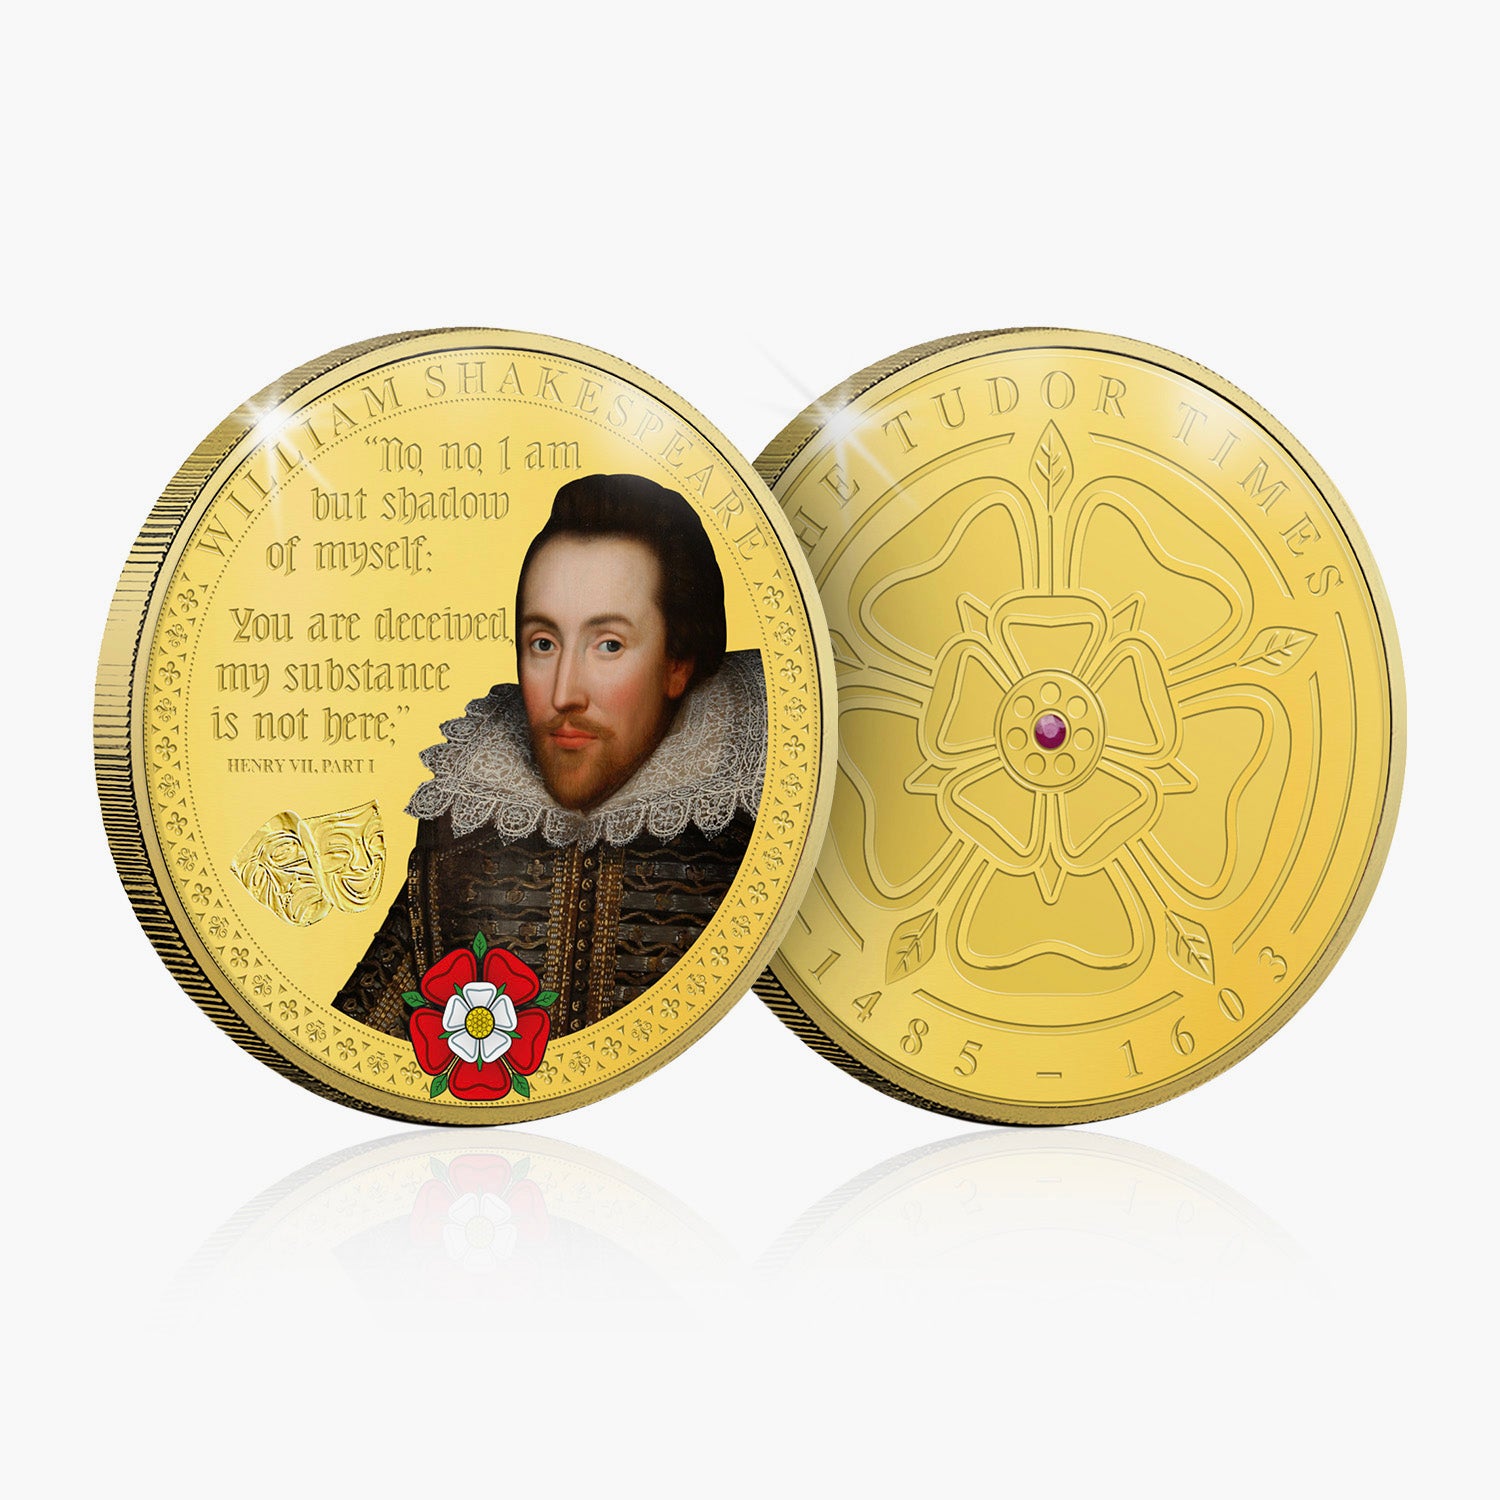 William Shakespeare Gold-Plated Commemorative